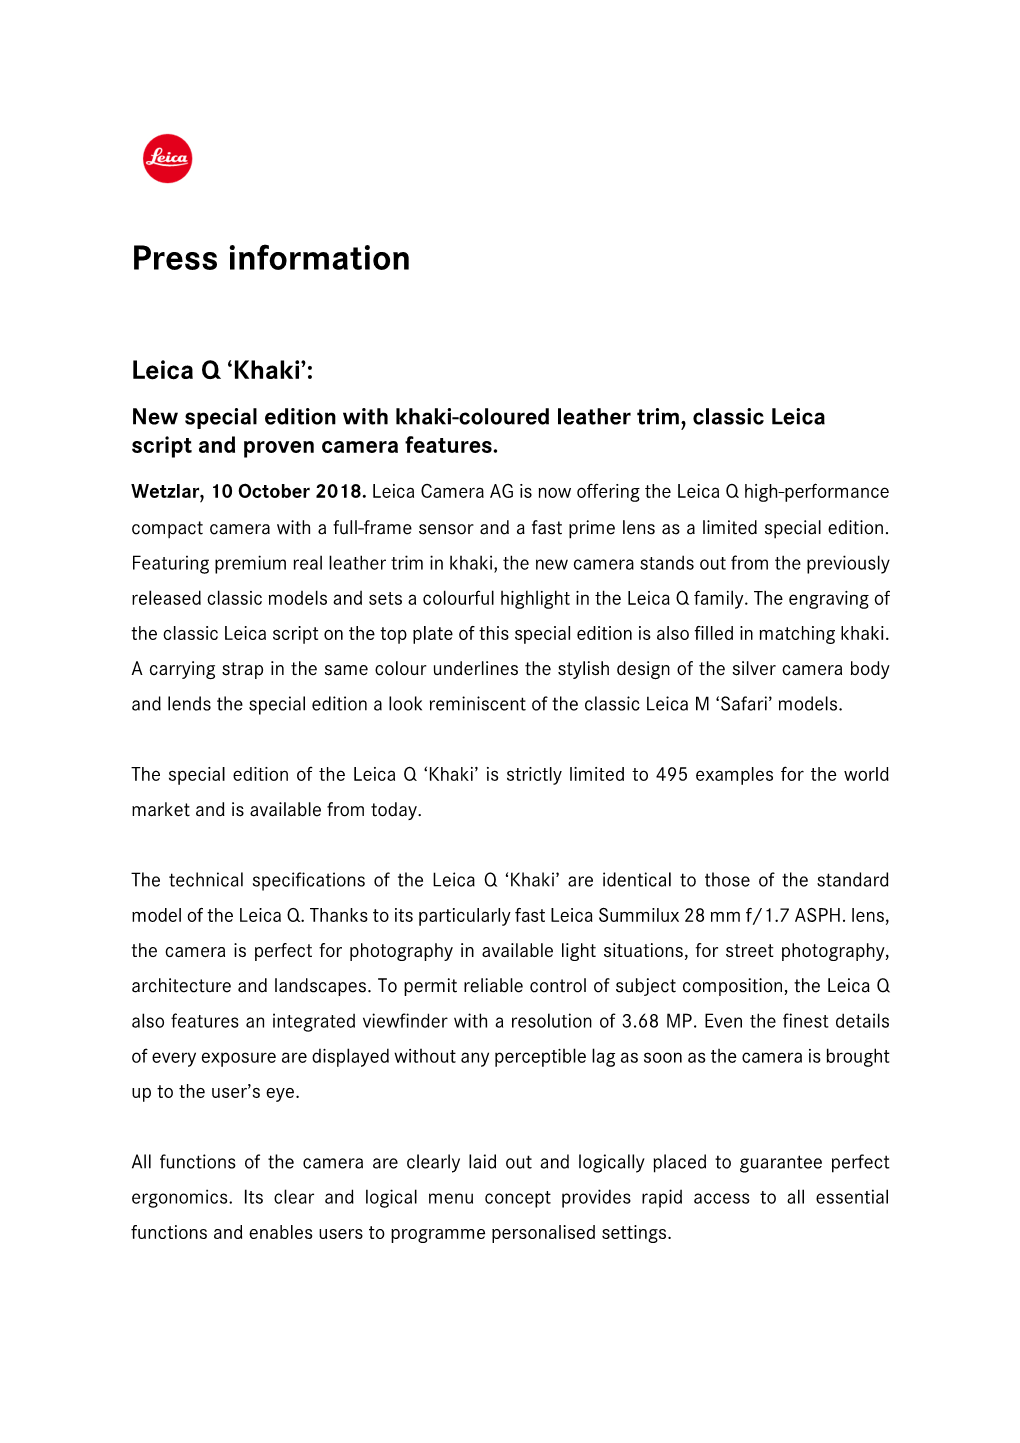 Press Information Leica Q